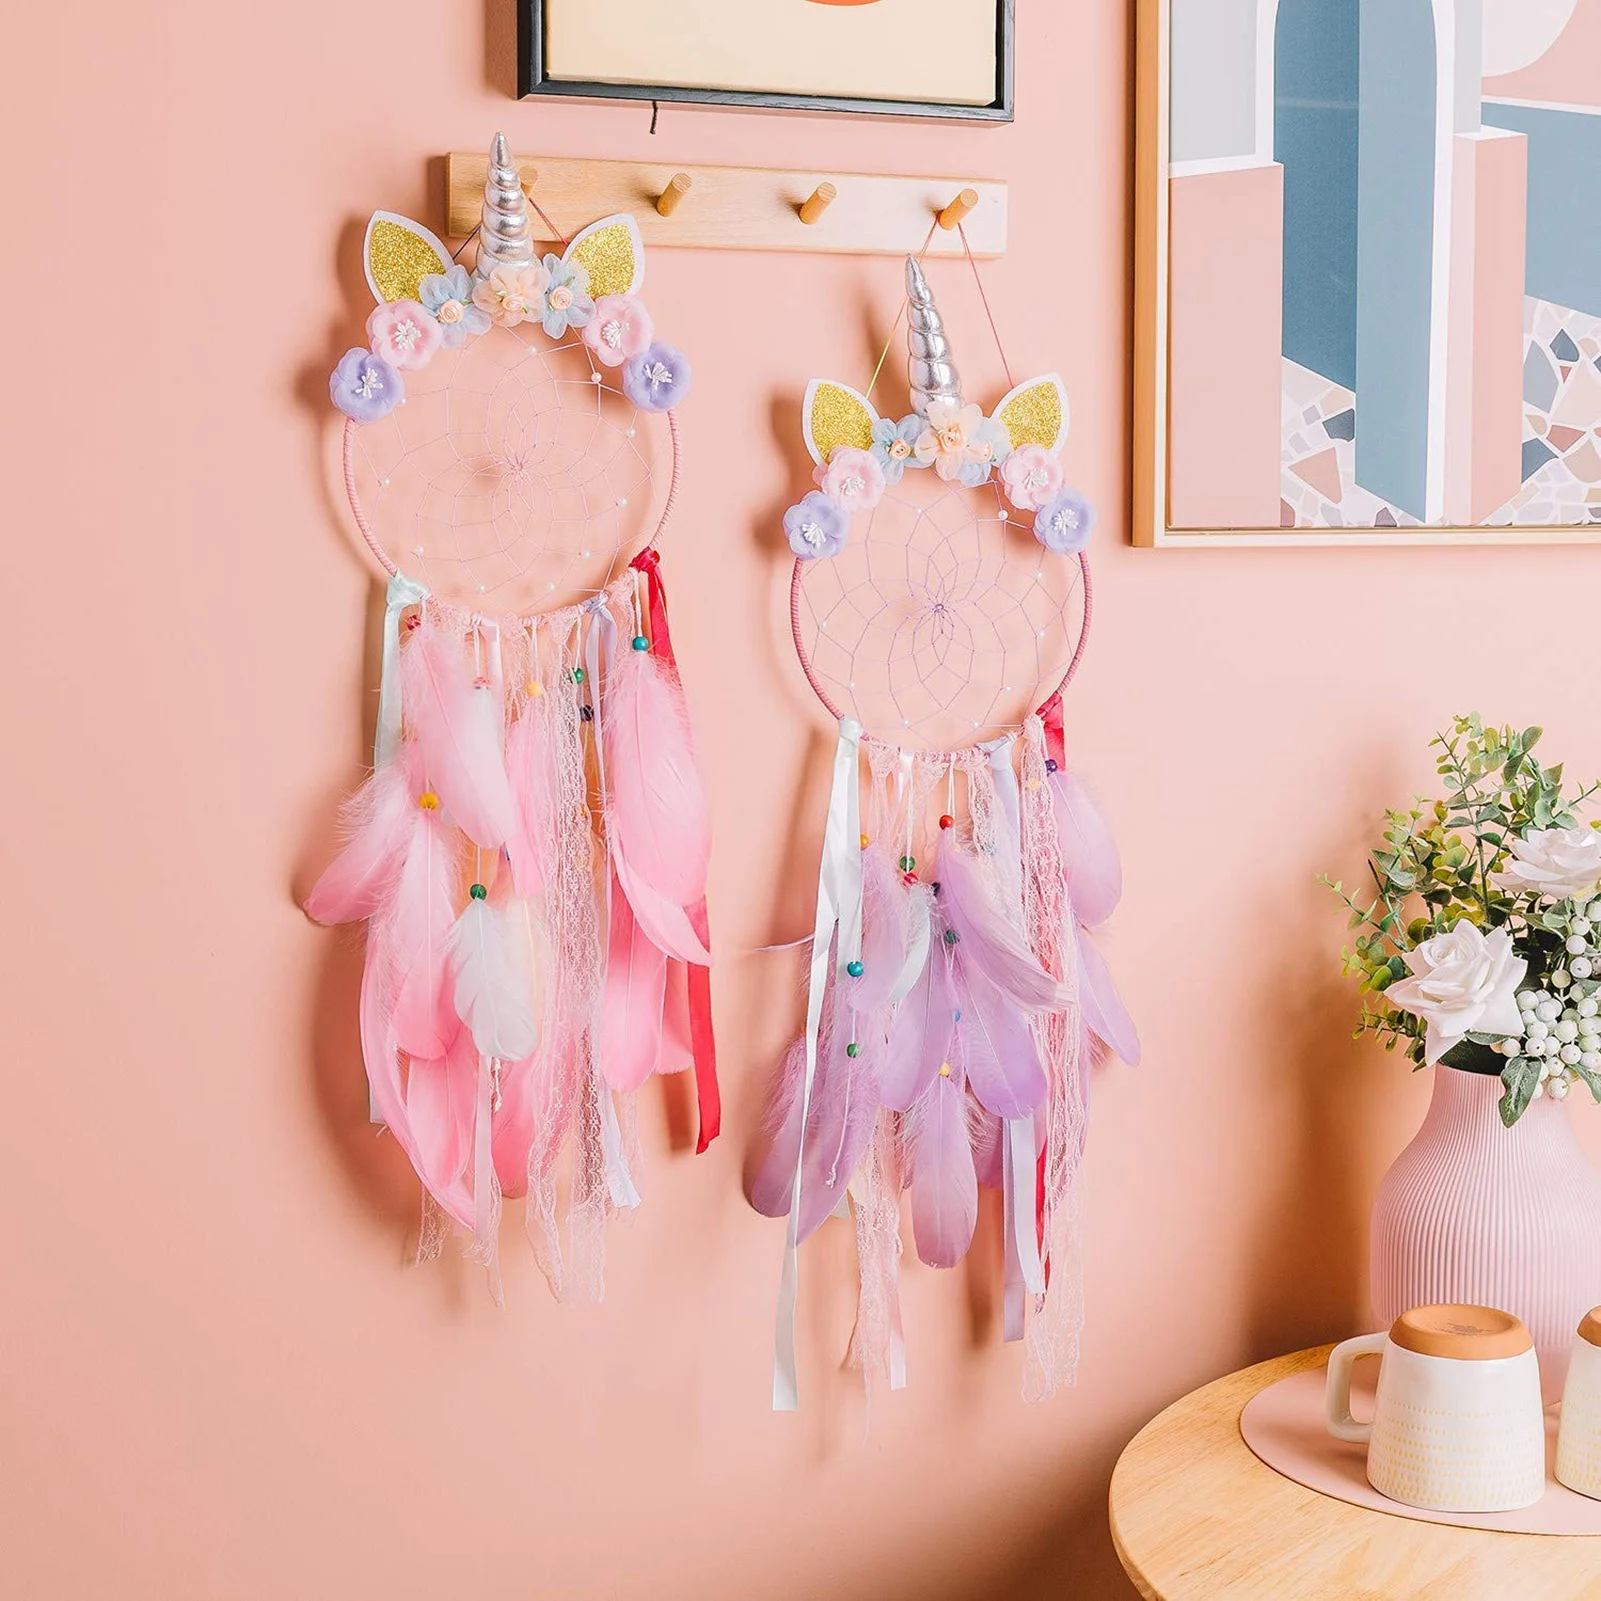 Unicorn Dream Catcher Handmade Purple Pink Feather Dreamcatchers Wall Hanging Ornaments For Girls Kids Room Decoration